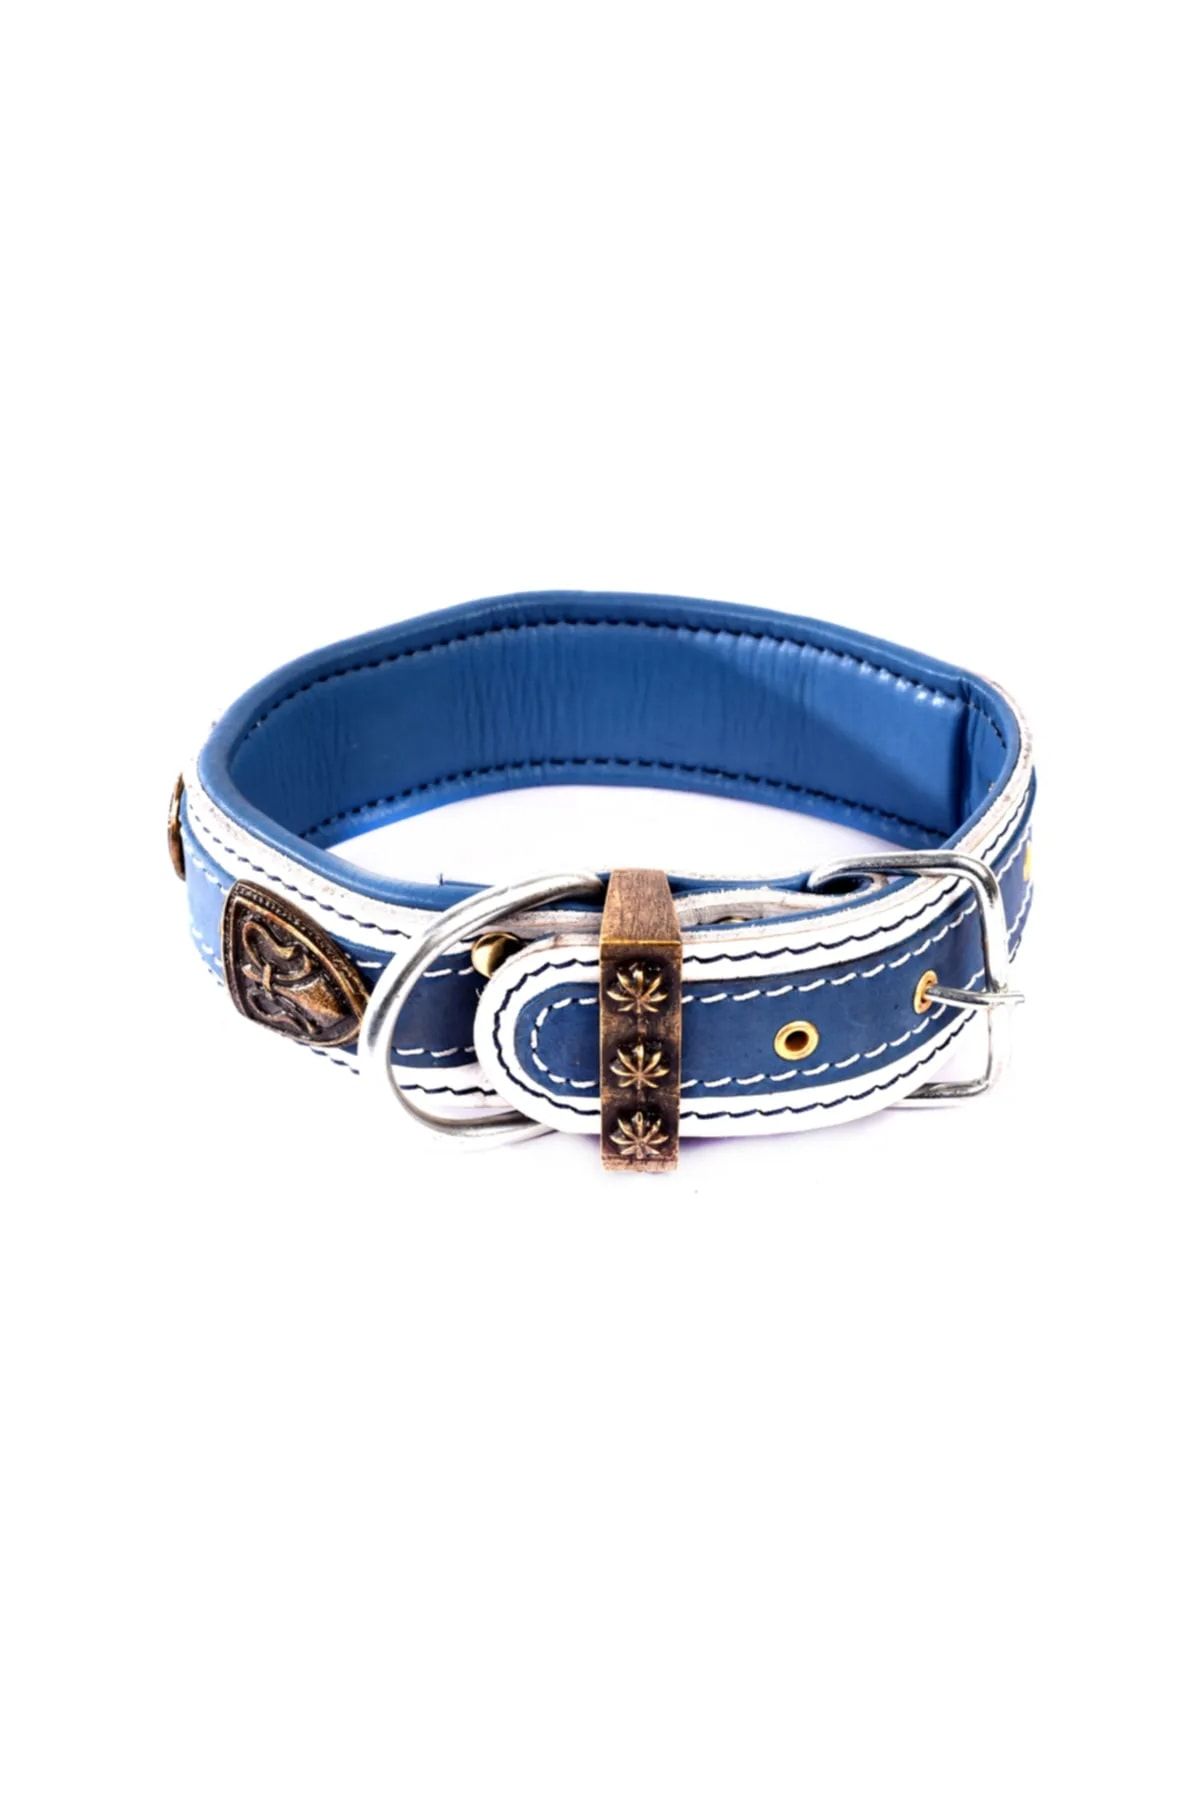 MgTasma Dog Collars - Blue - Neck Collar - Trendyol